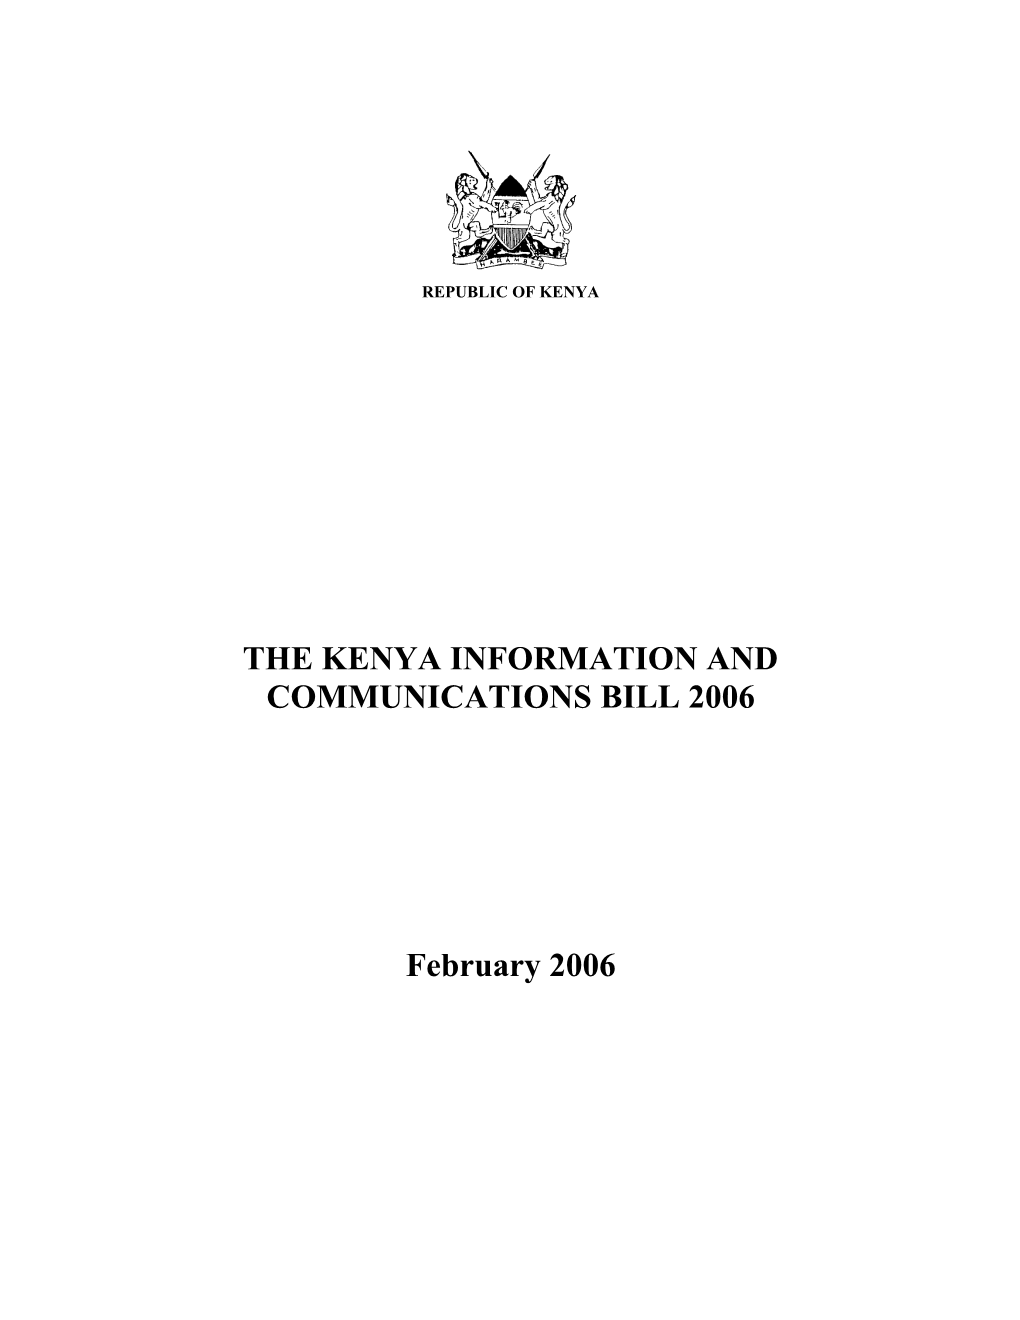 The Kenya Communications (Amendment) Bill, 2004